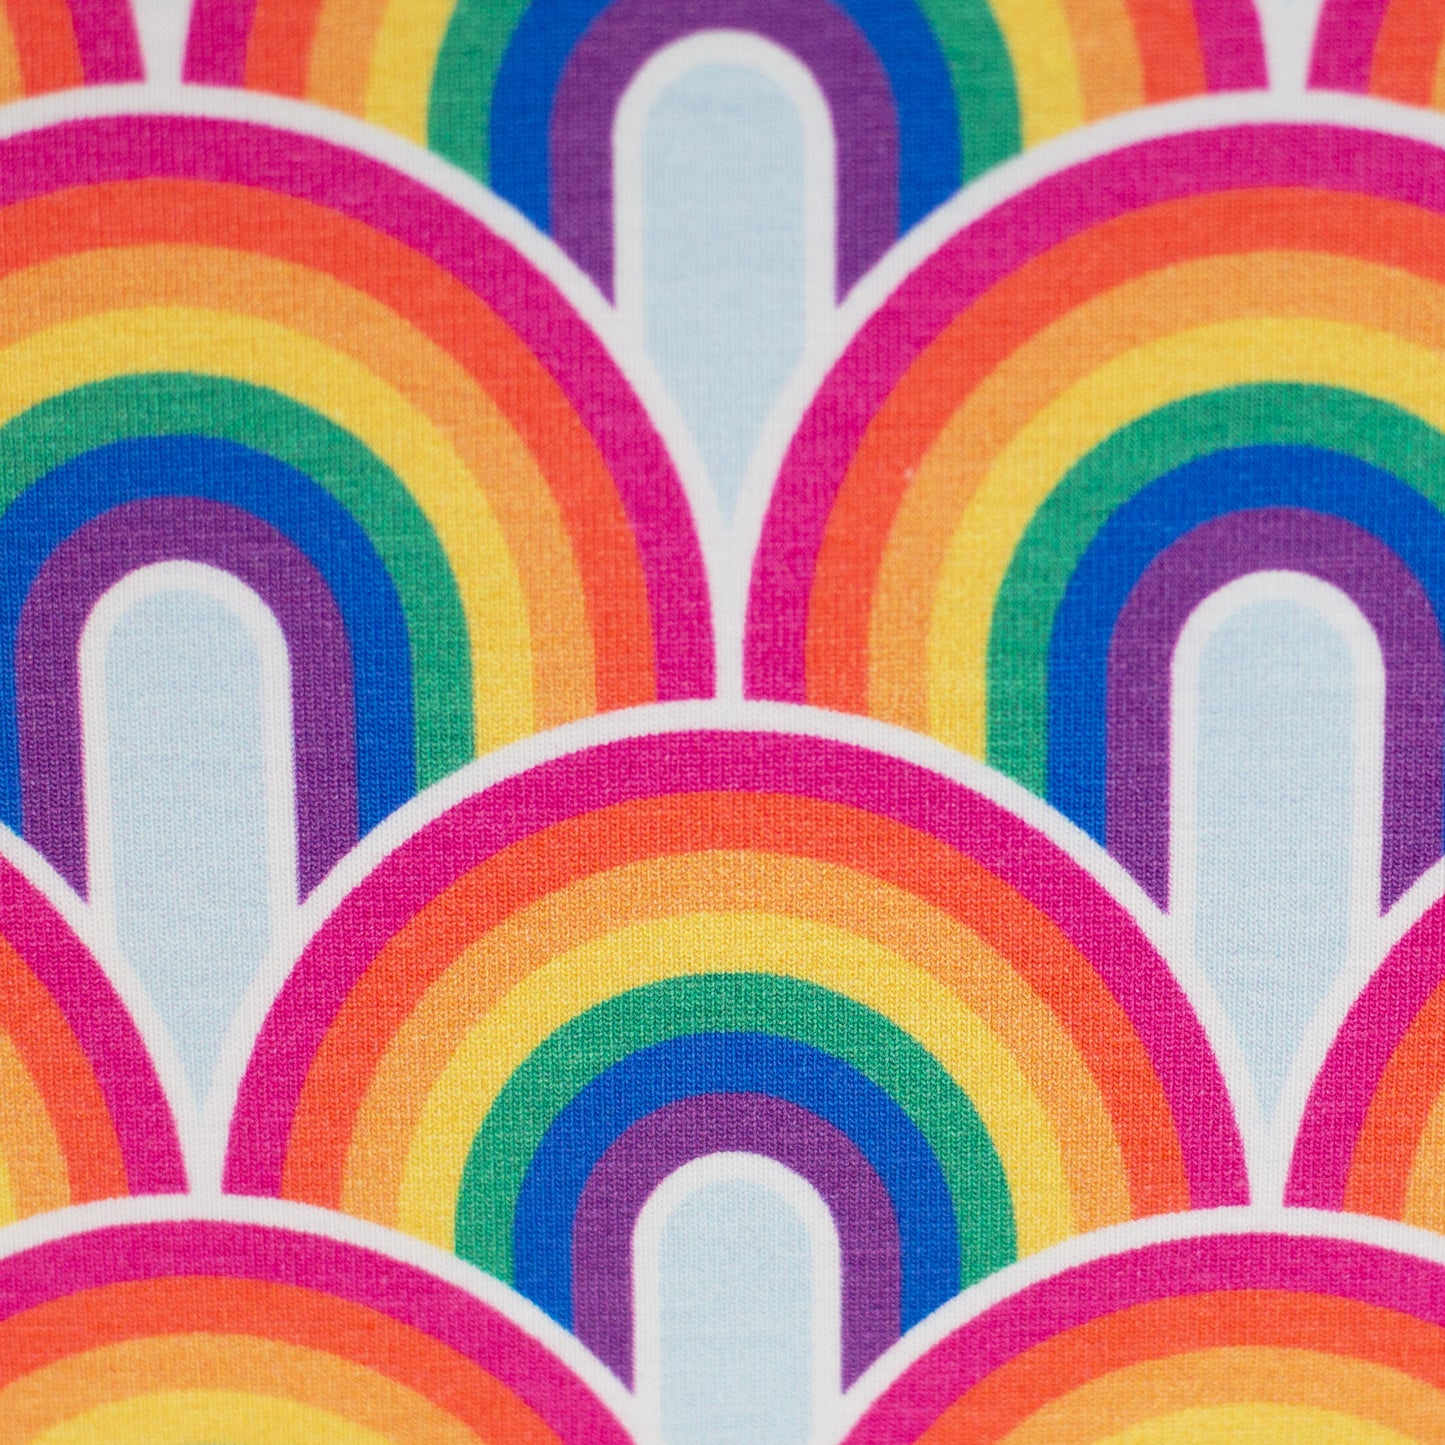 Jersey Rainbows by lycklig design bunt